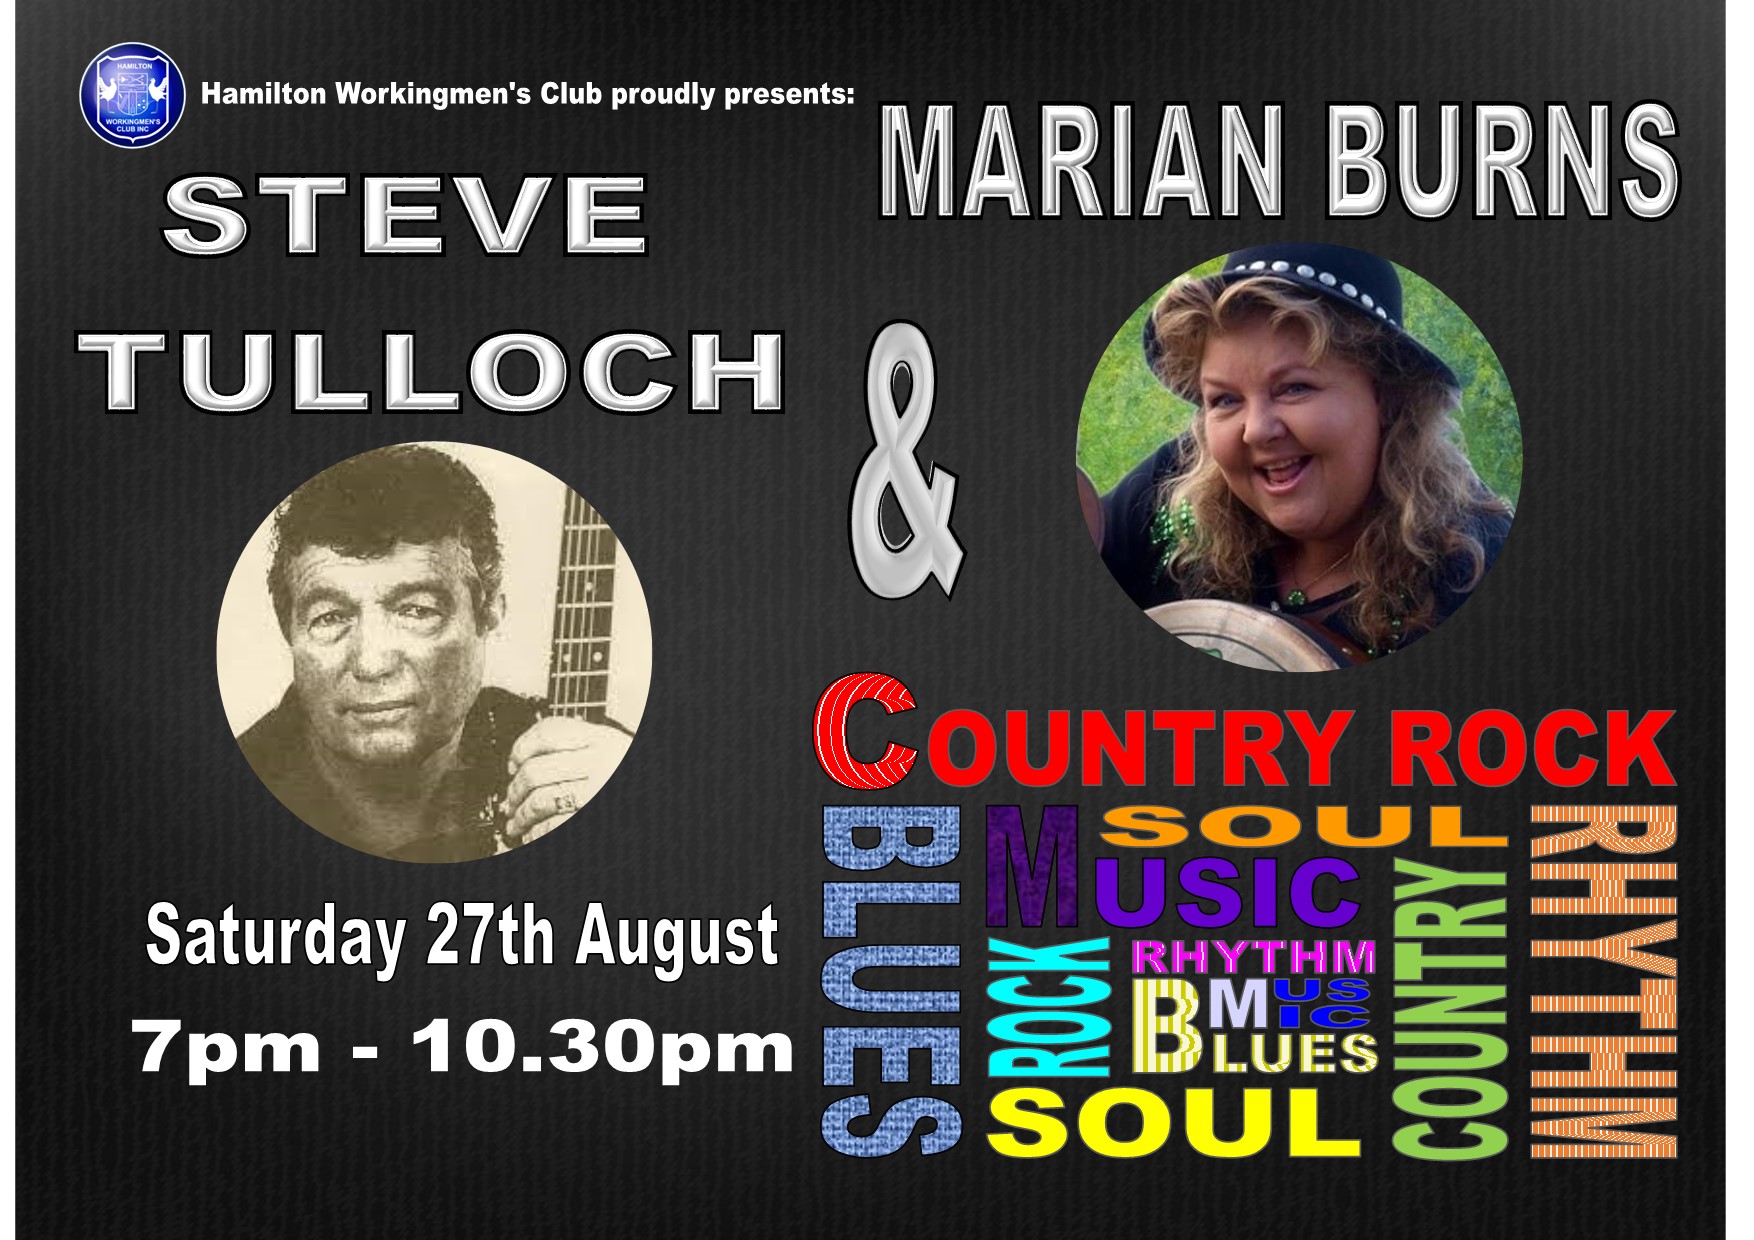 Steve Tulloch & Marian Burns 27th August 2022